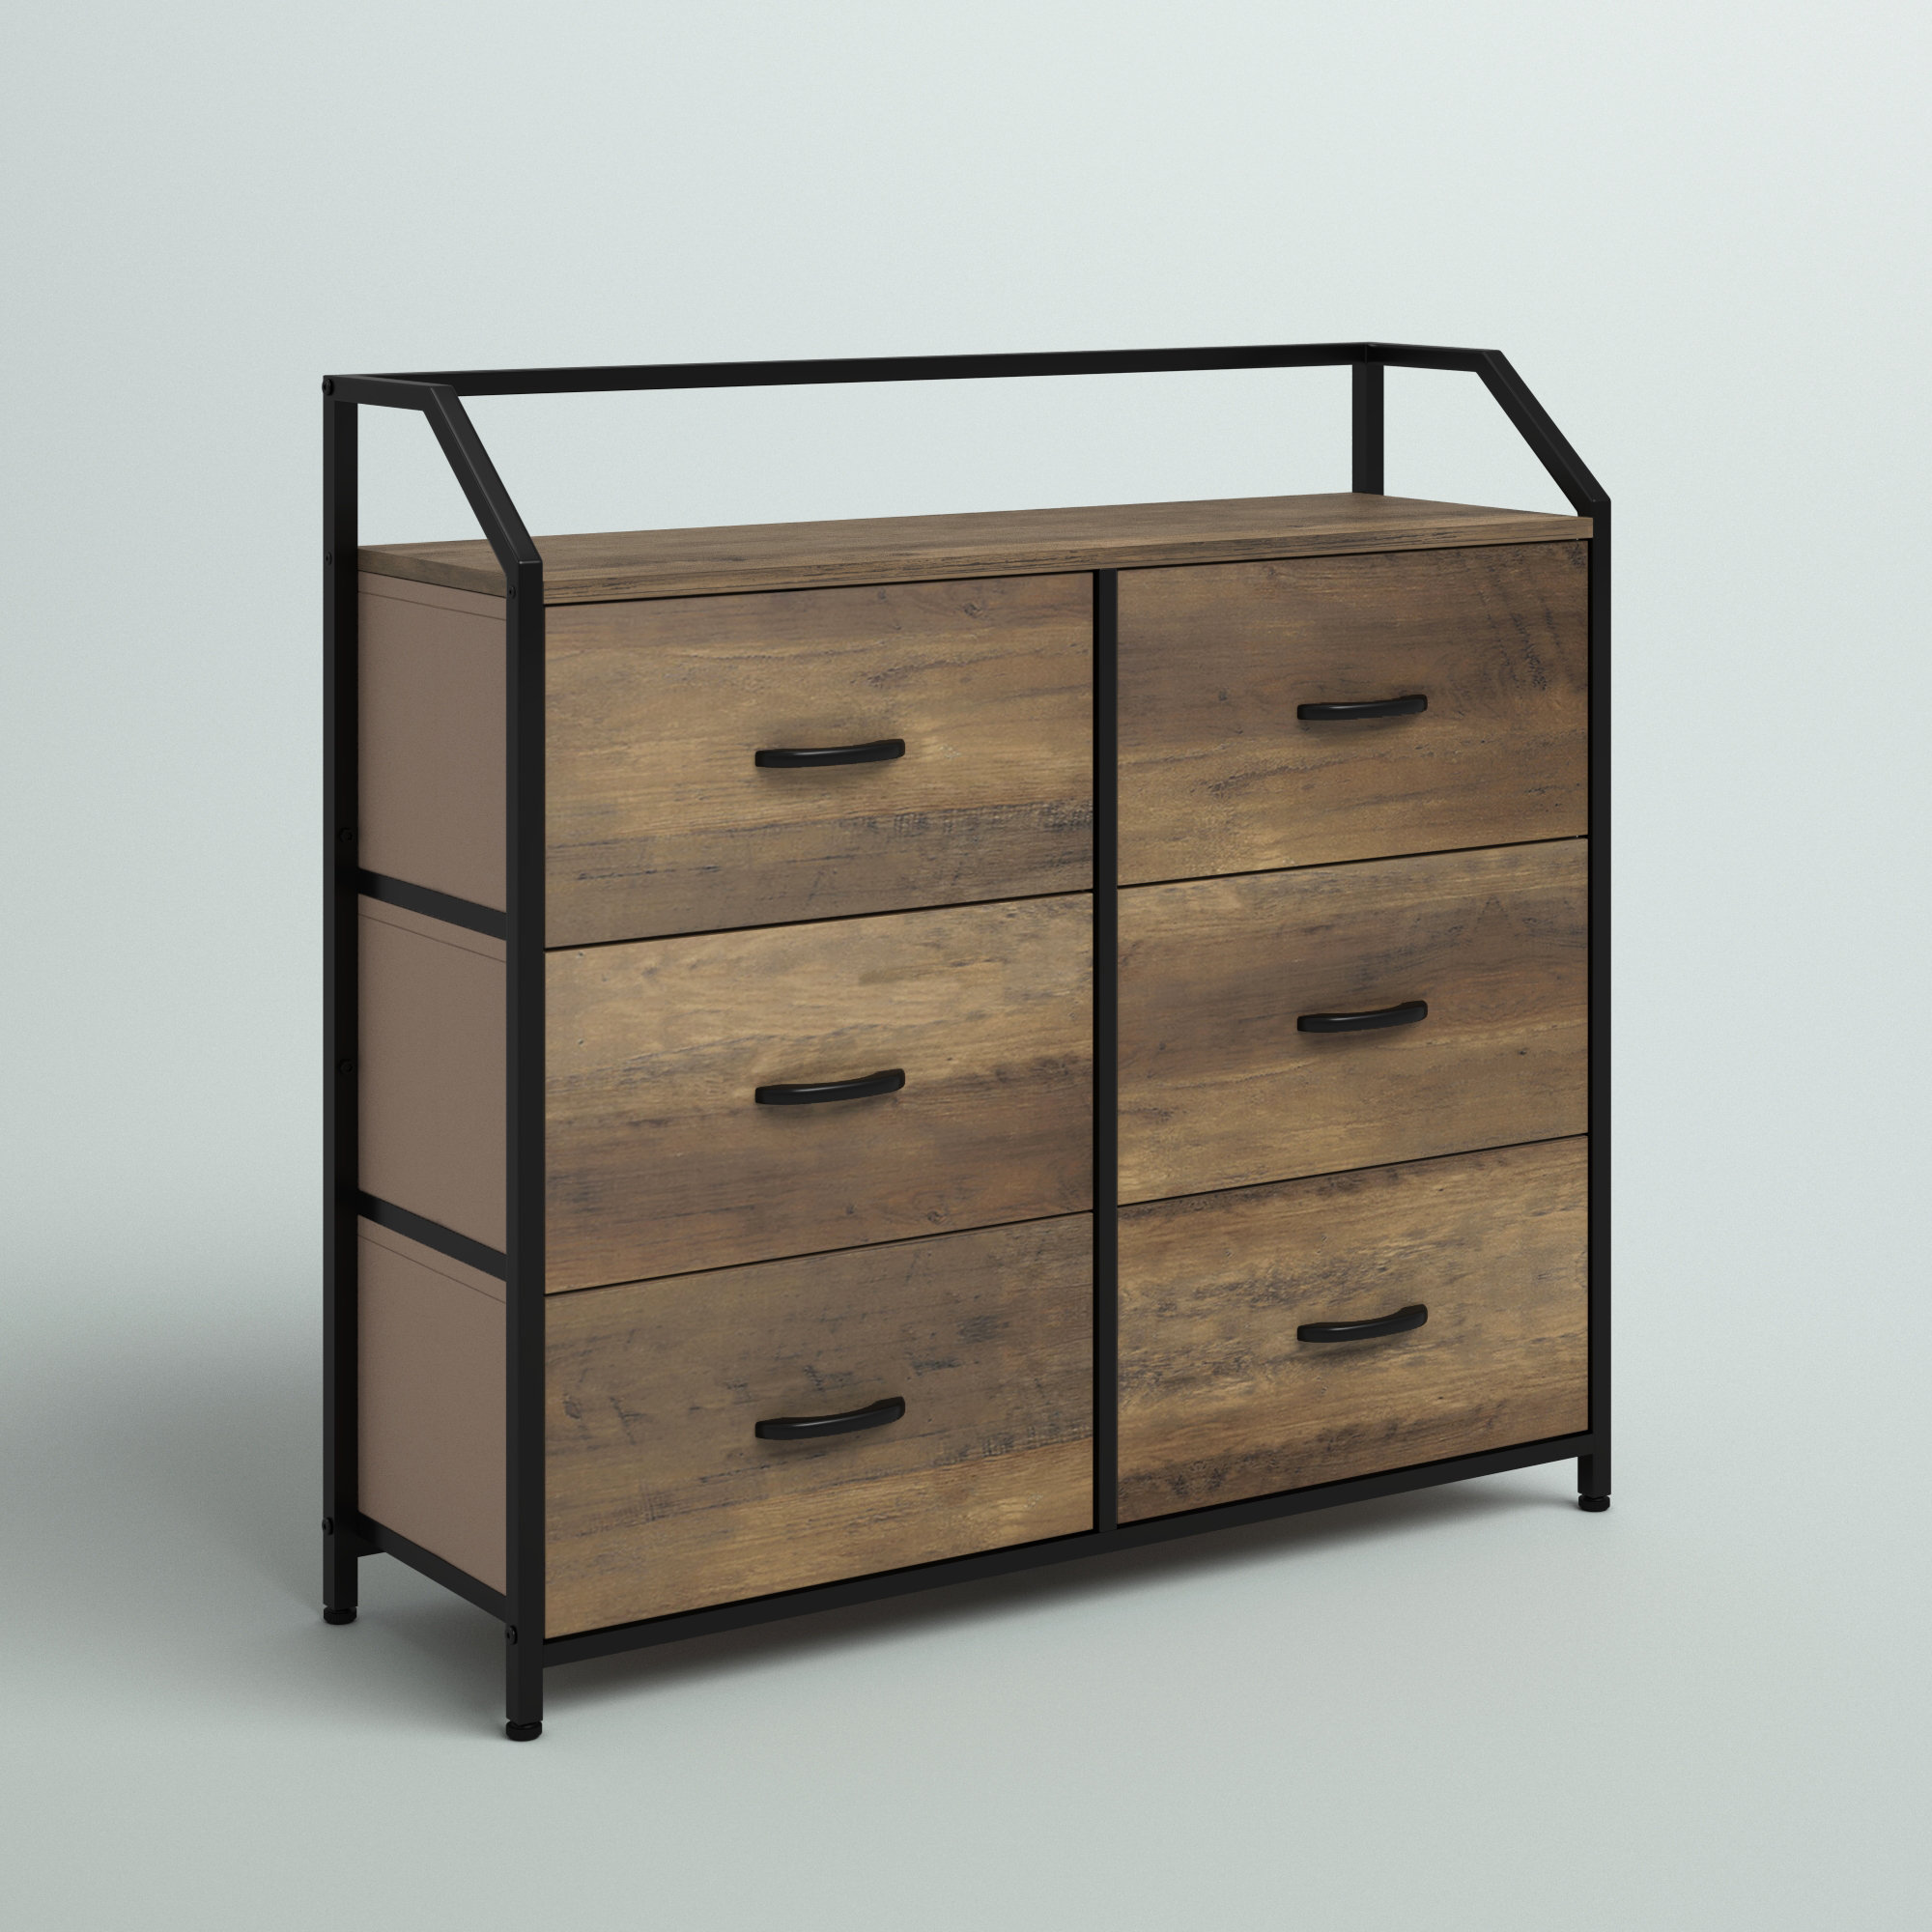 Bedroom Double Dresser Wooden Storage 6 Drawer Organizer Wood Furniture Black 